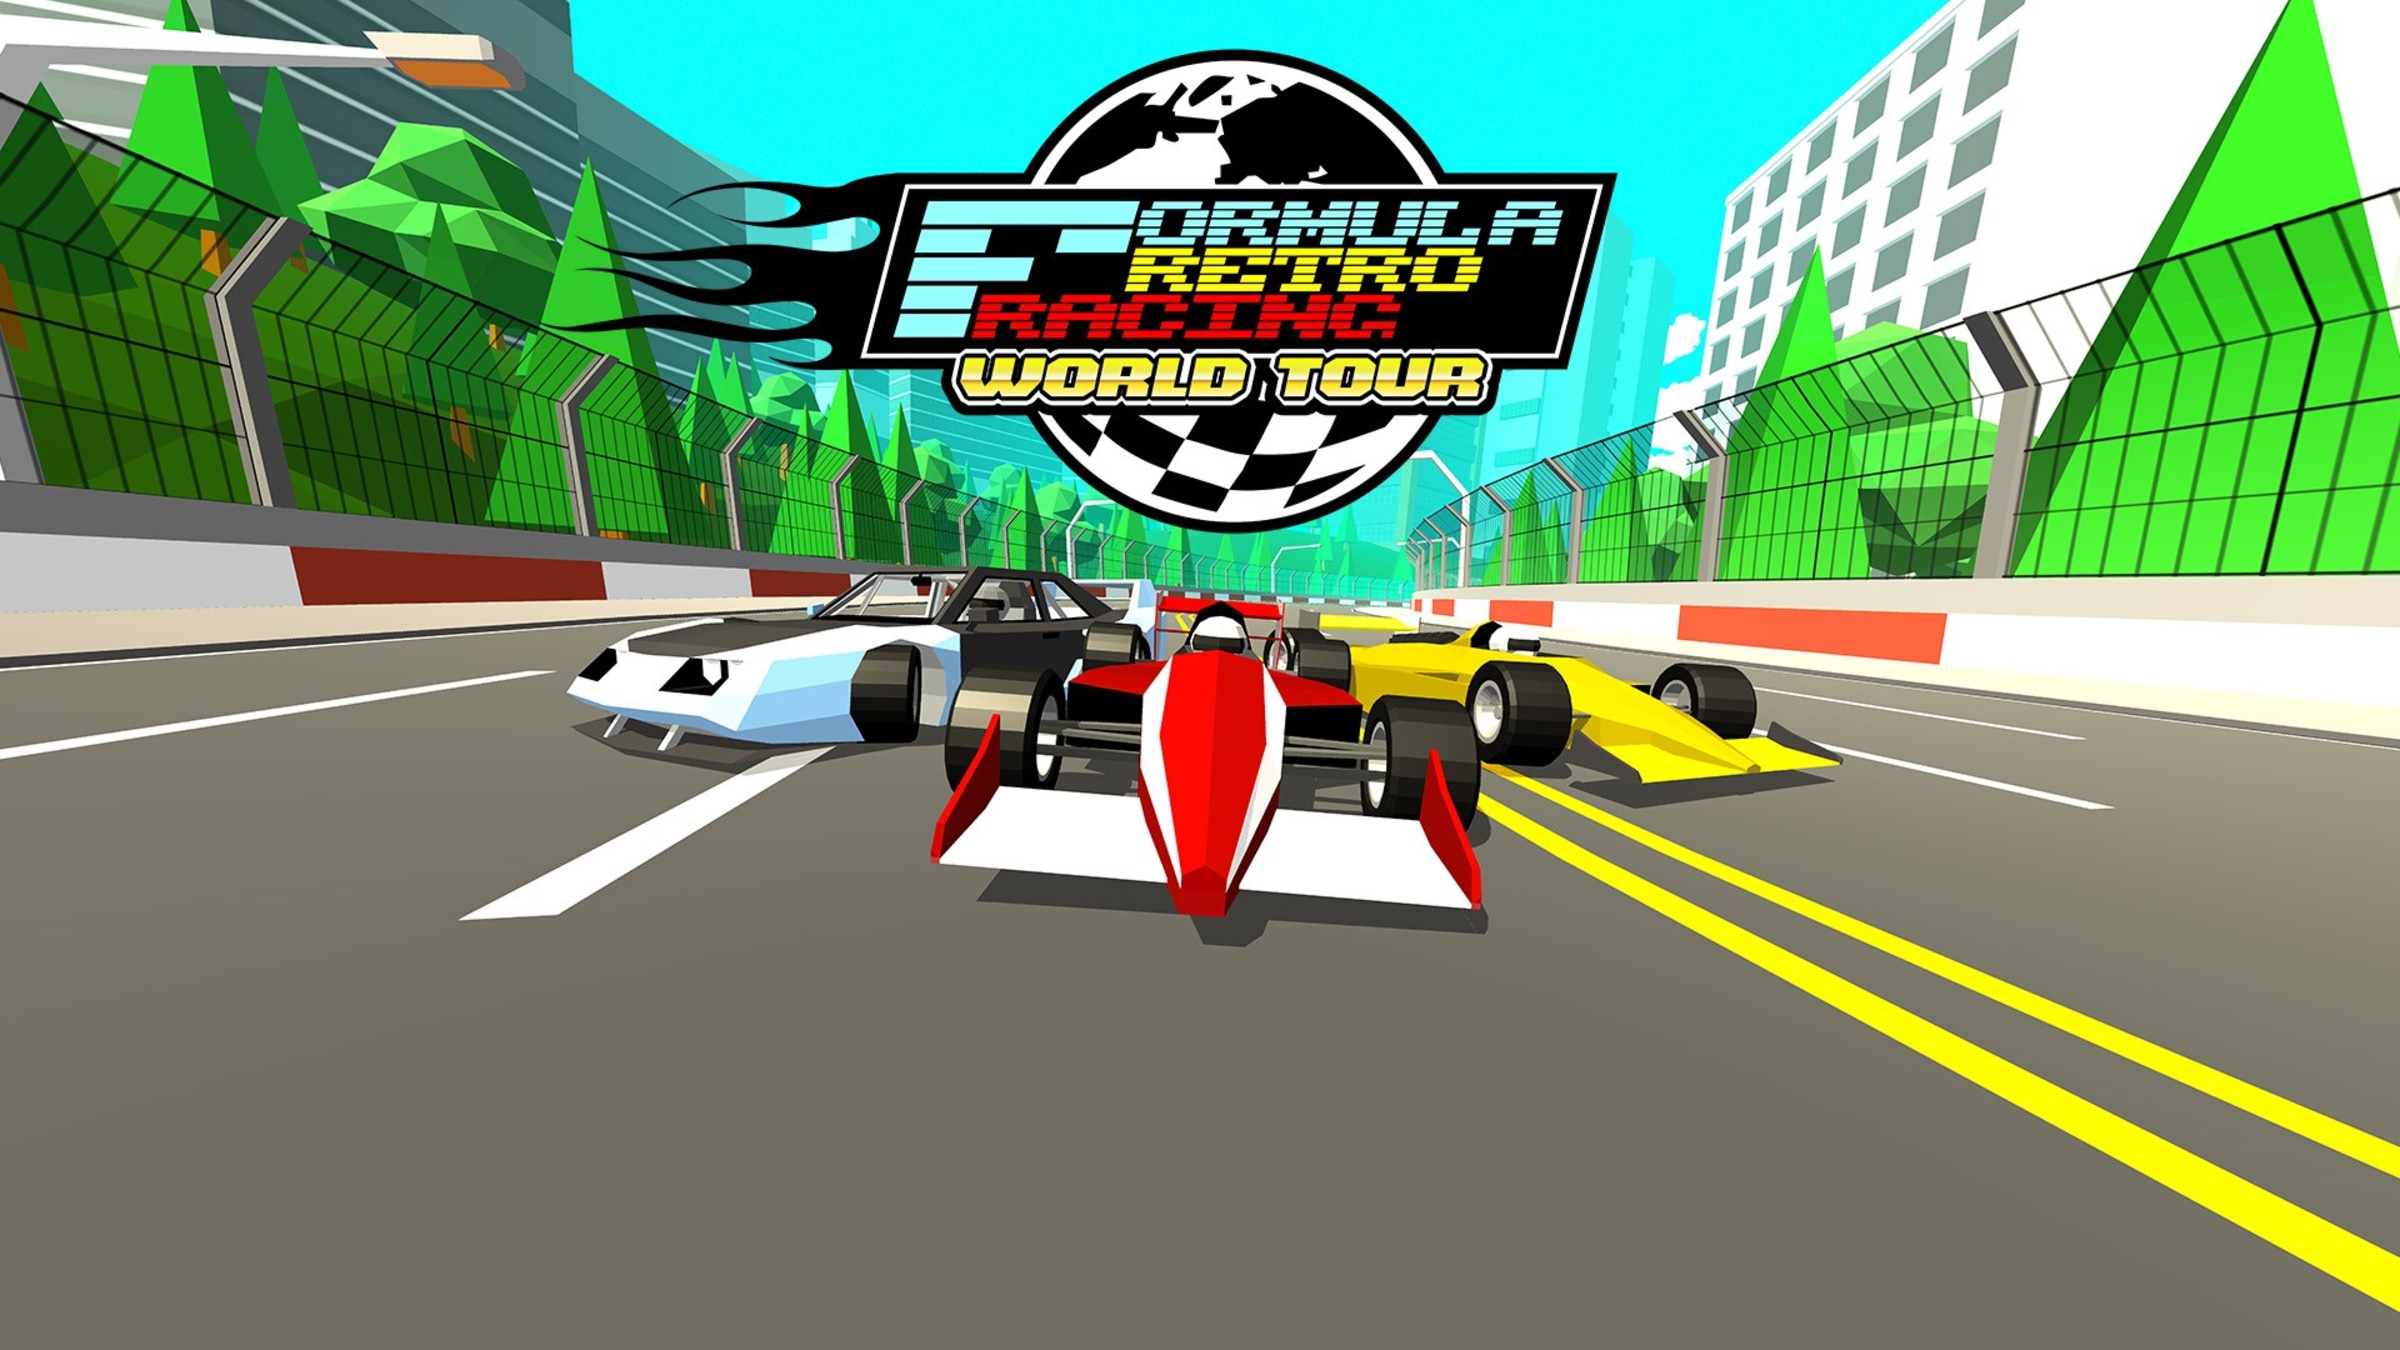 Speed 3: Grand Prix for Nintendo Switch - Nintendo Official Site